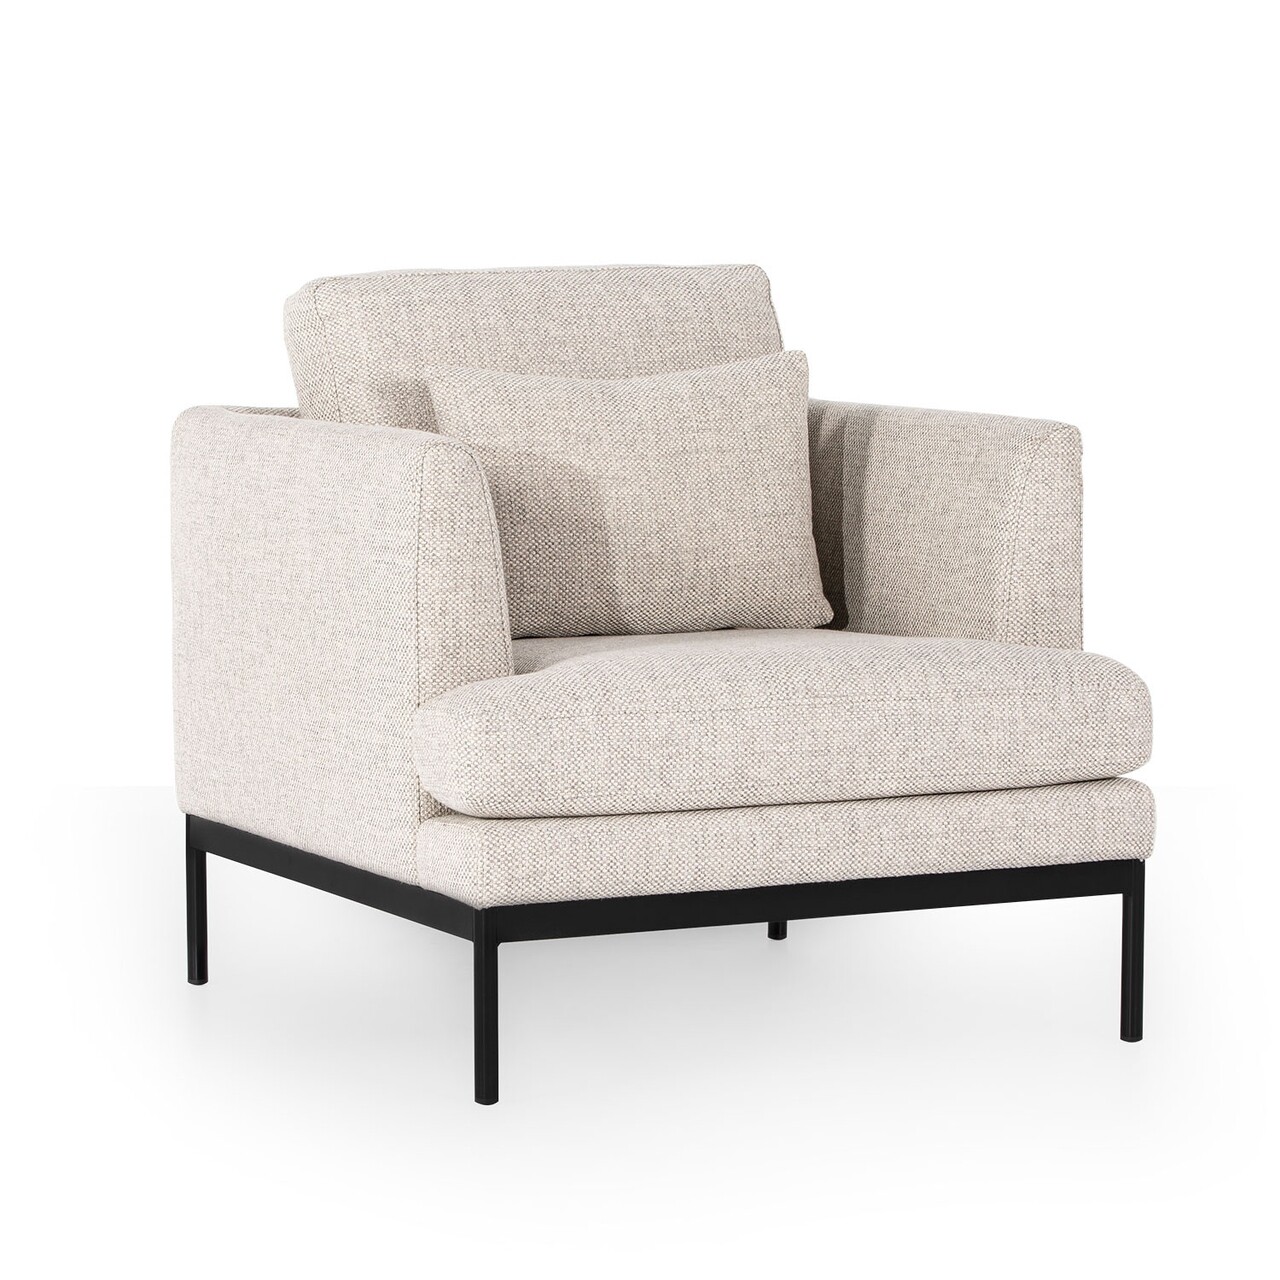 Pearl fotel, ndesign, 82x88x85 cm, fa, krémszín